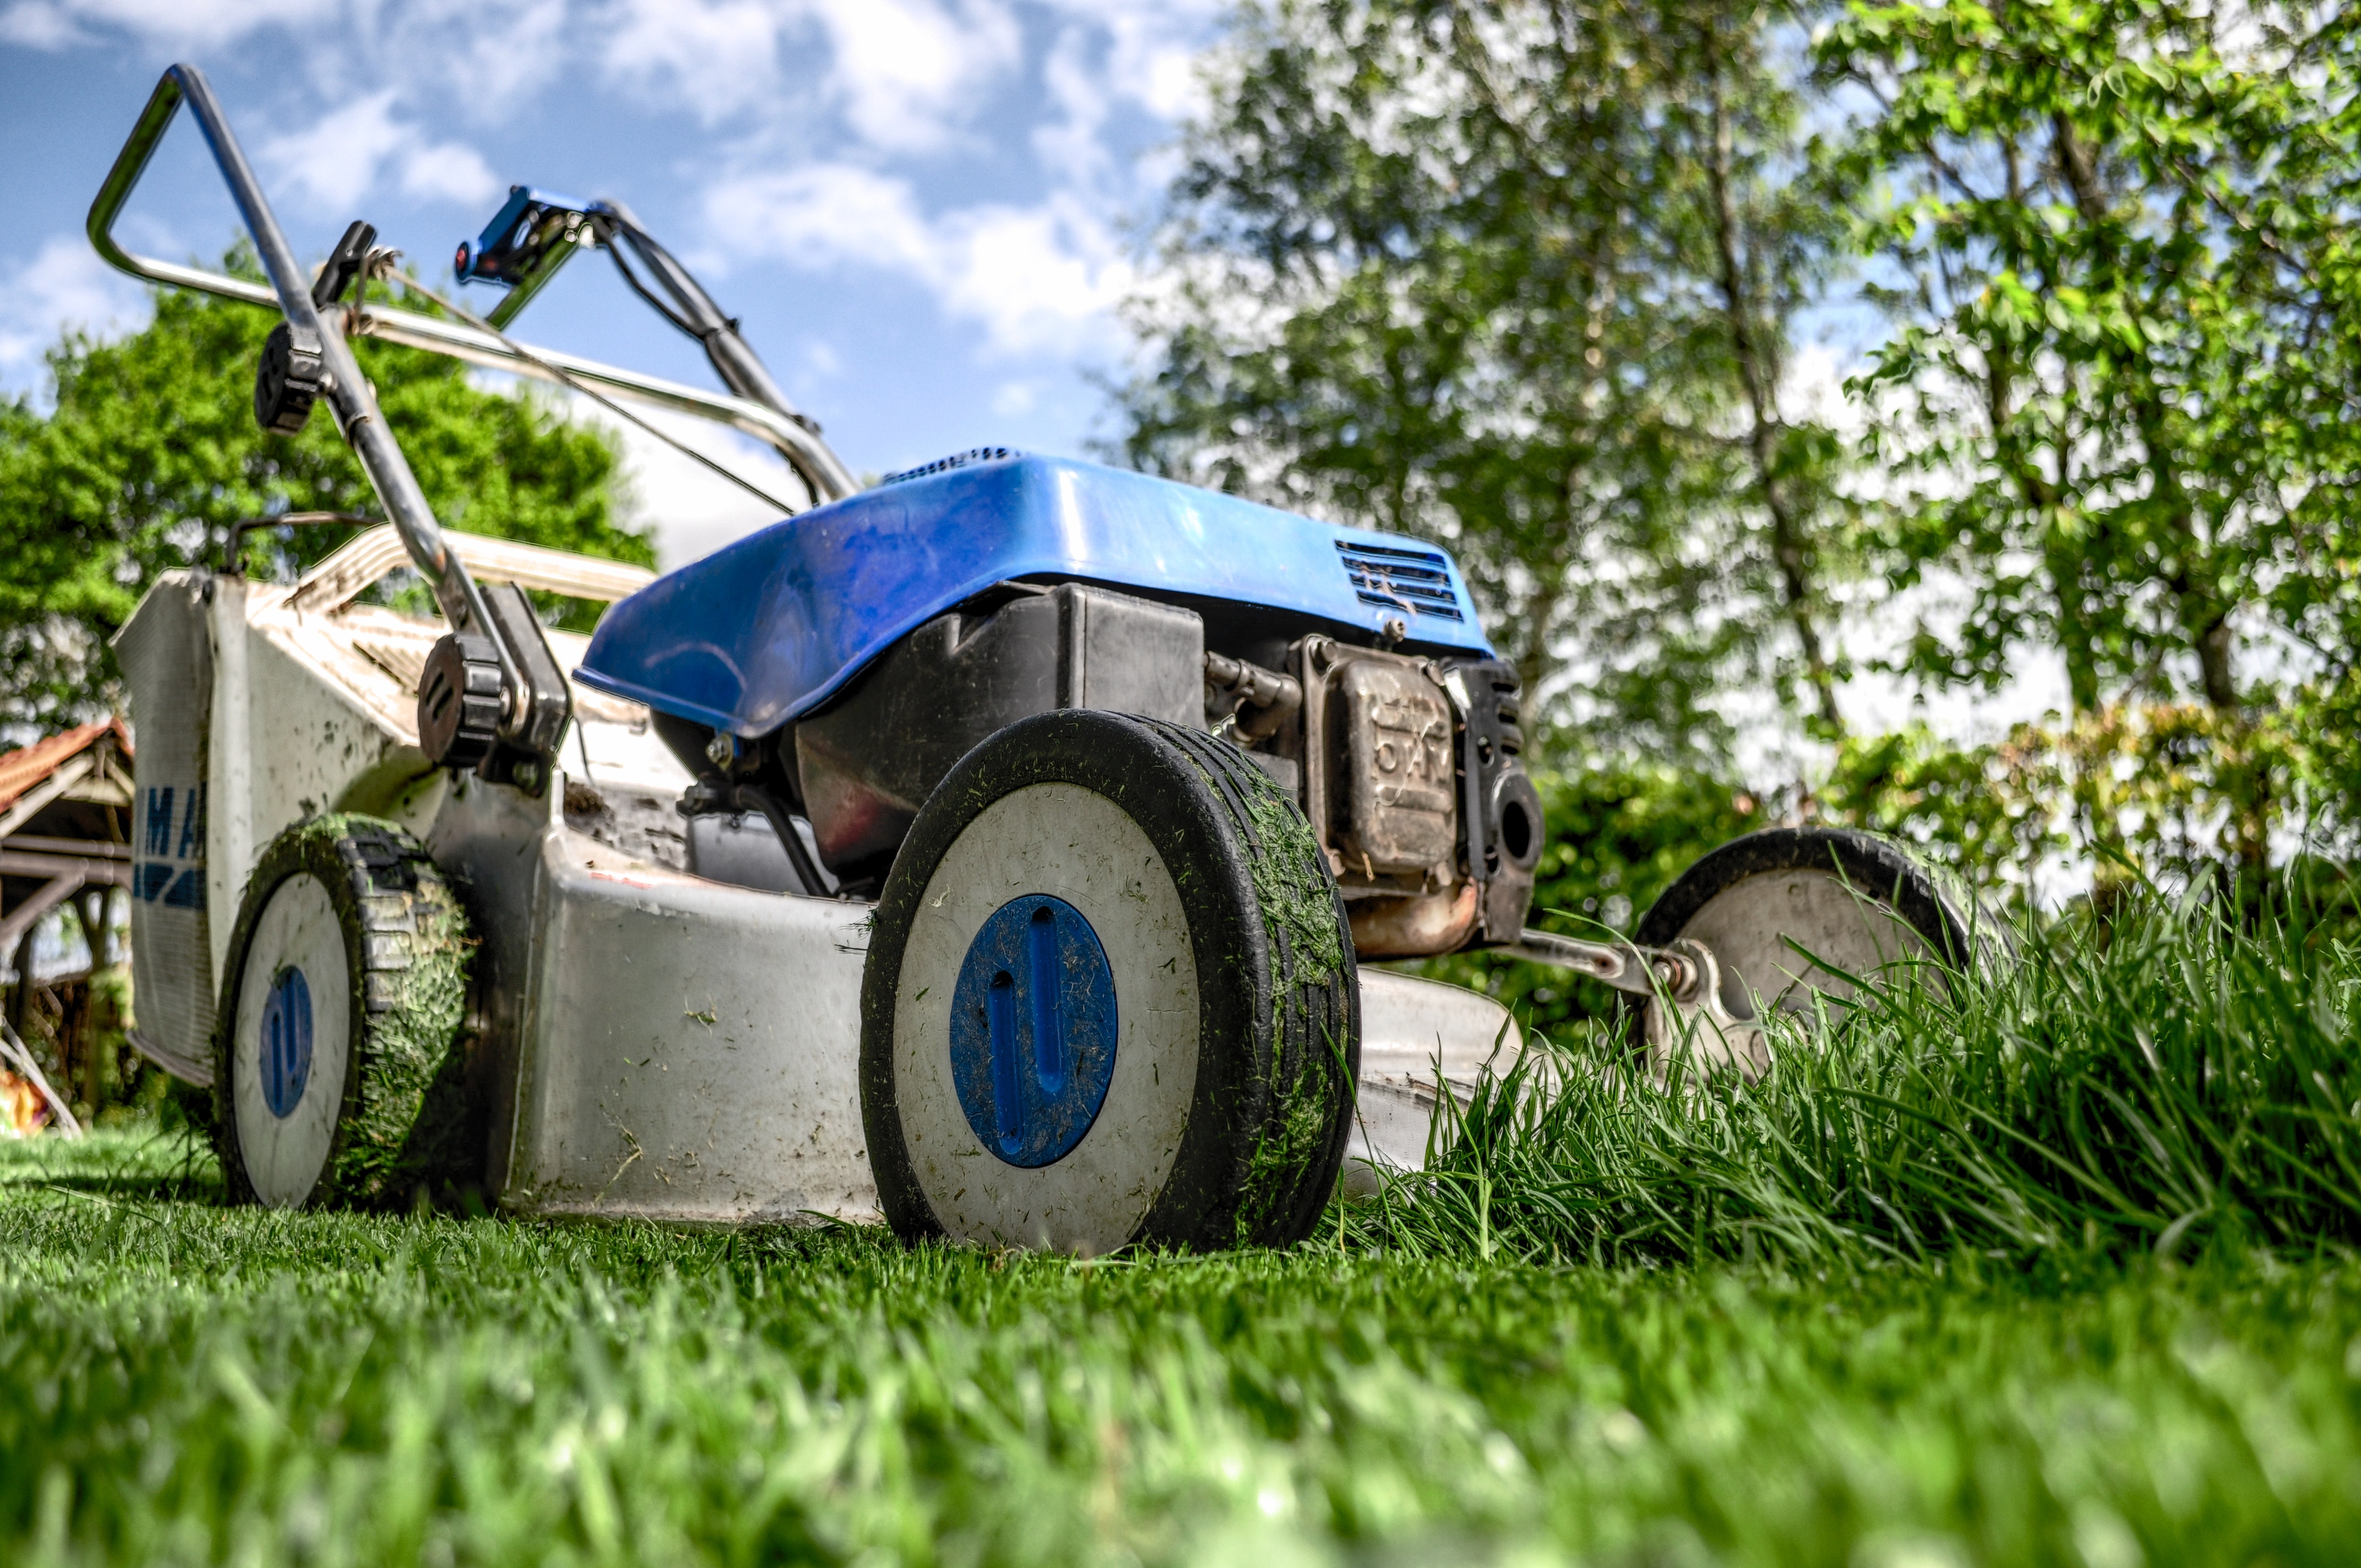 Blue lawn mower on green grass